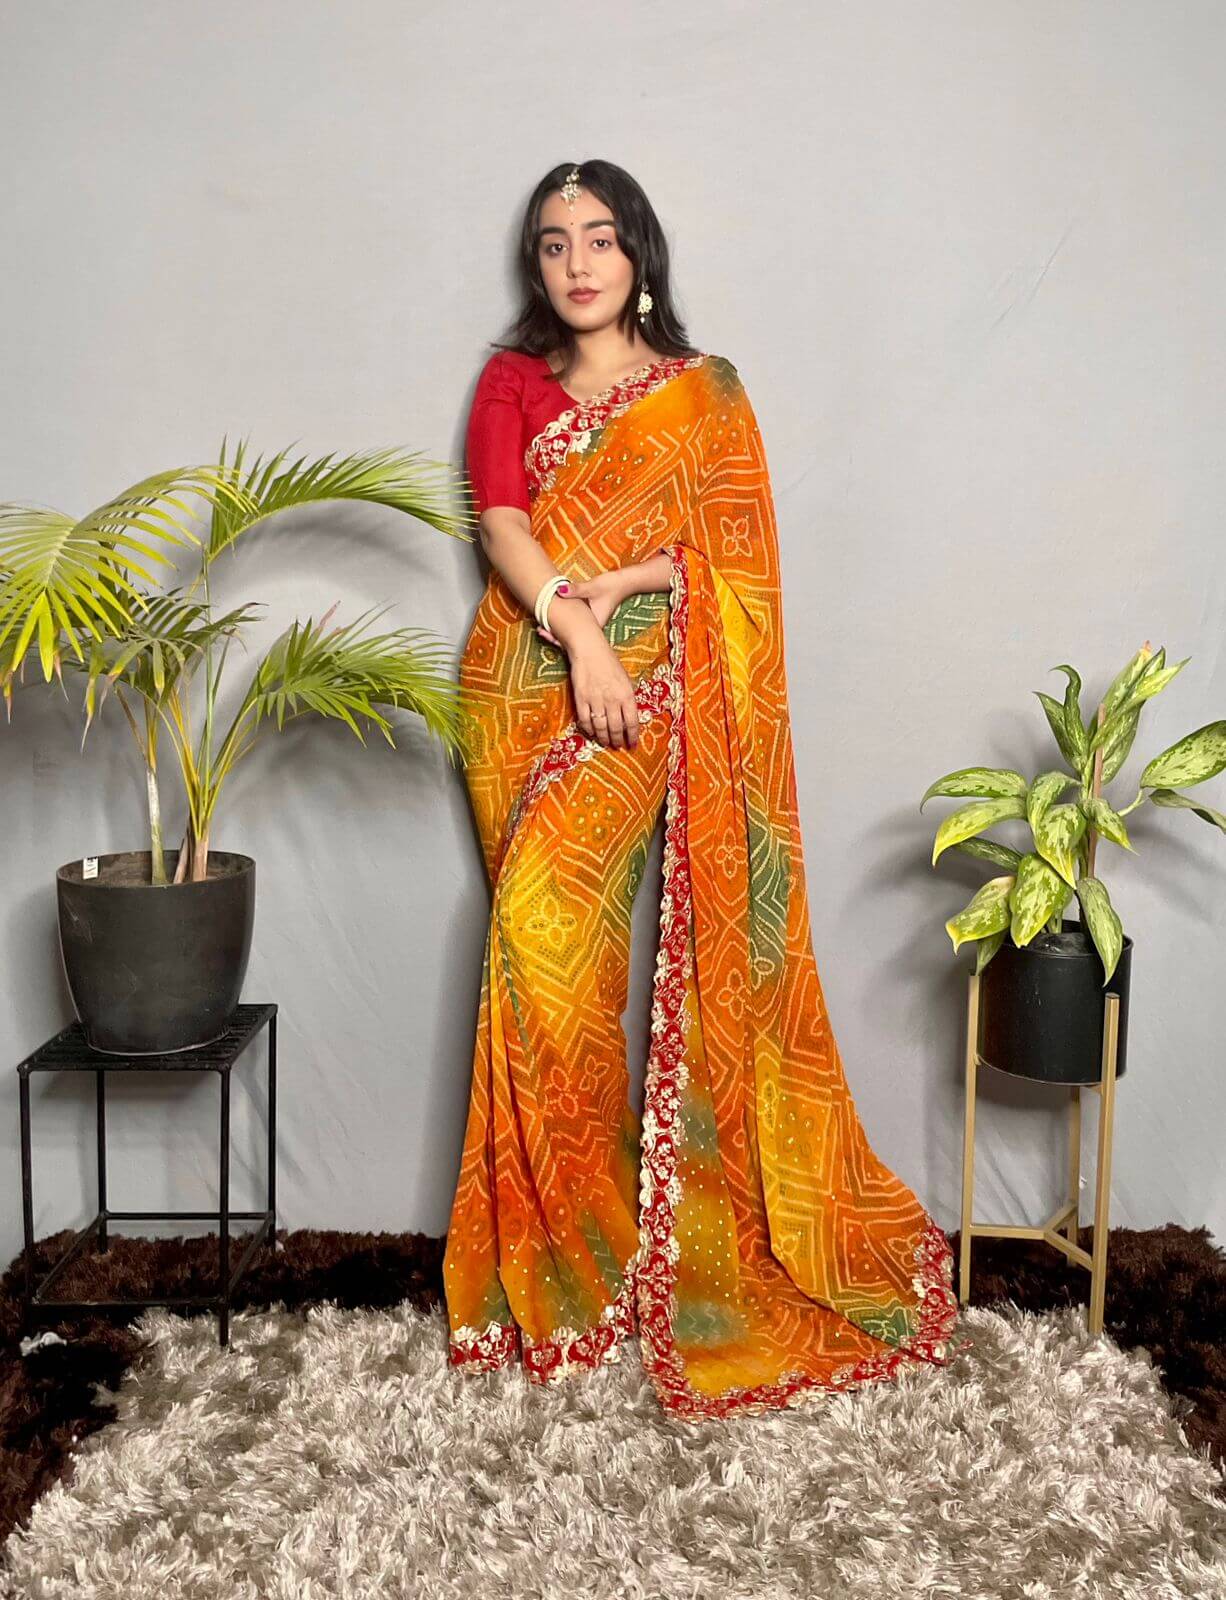 beautiful sari in orange